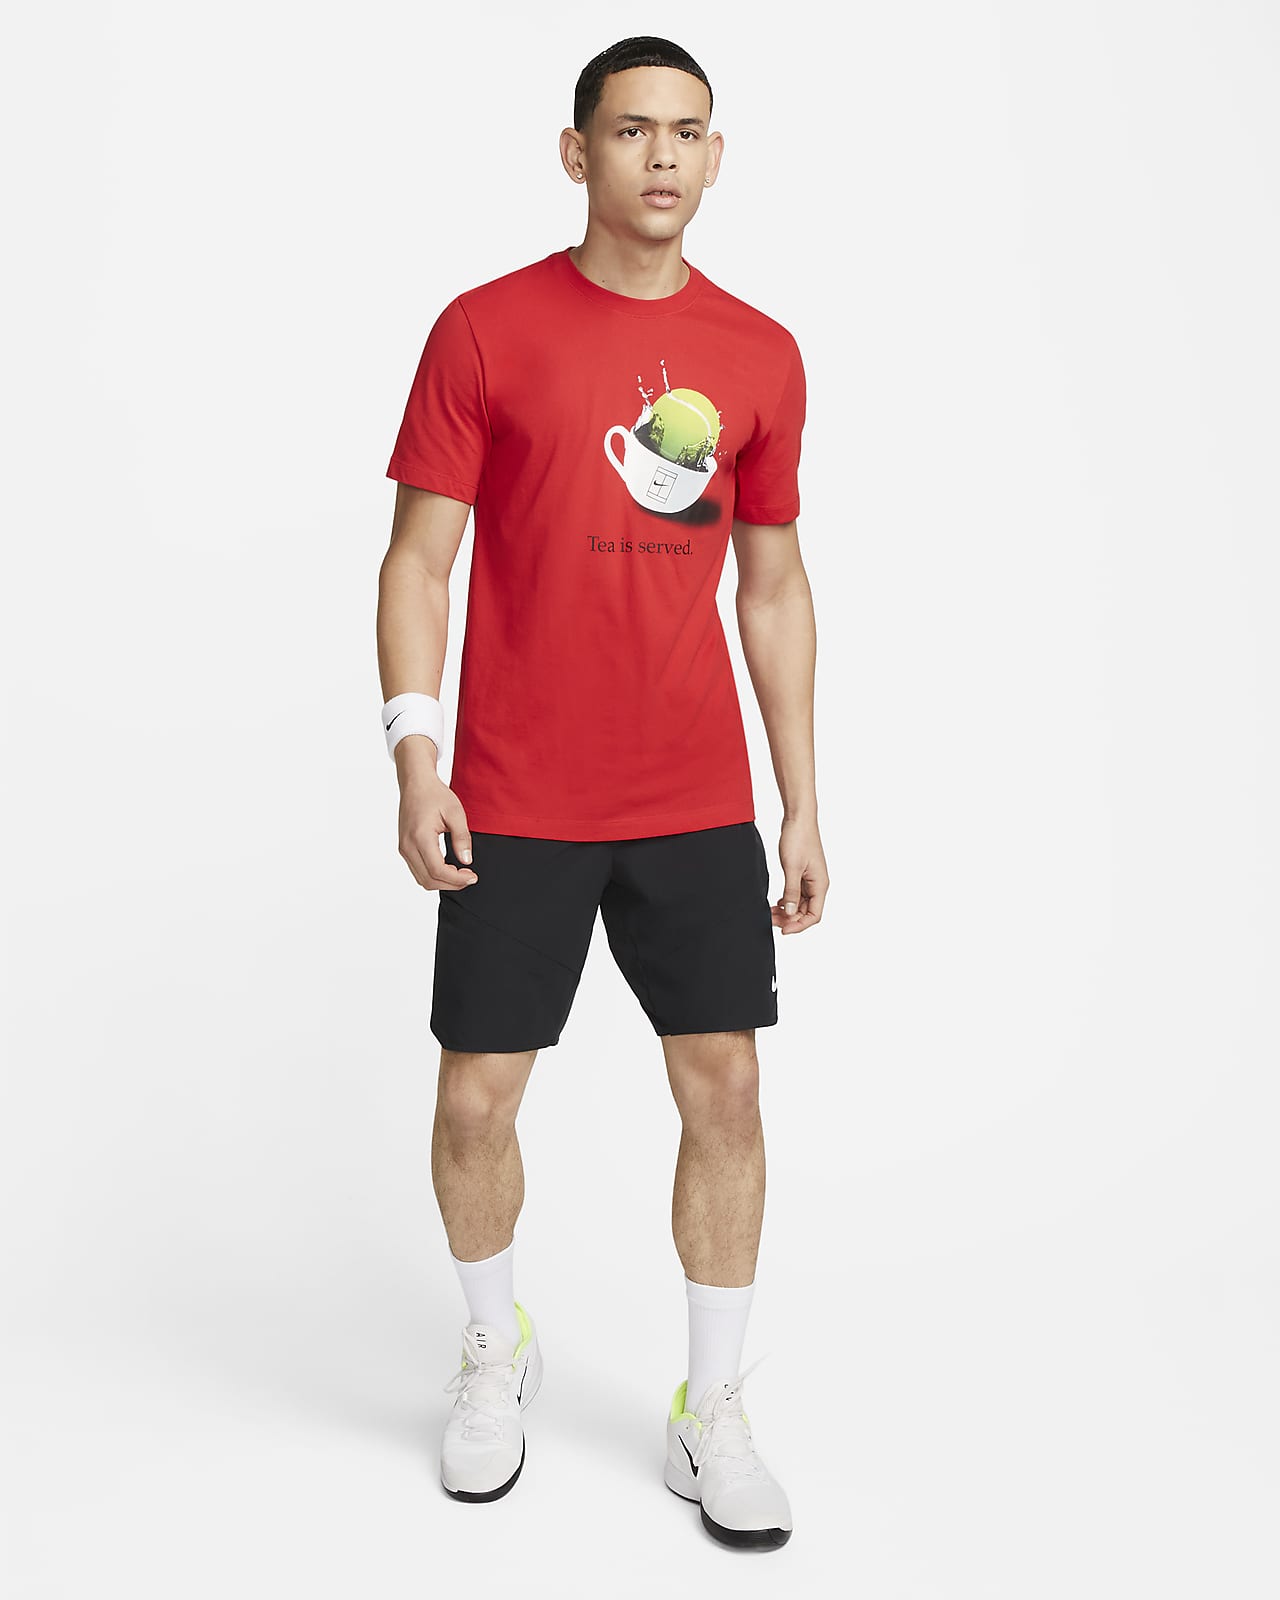 Nikecourt Dri-Fit Men'S Tennis T-Shirt. Nike.Com